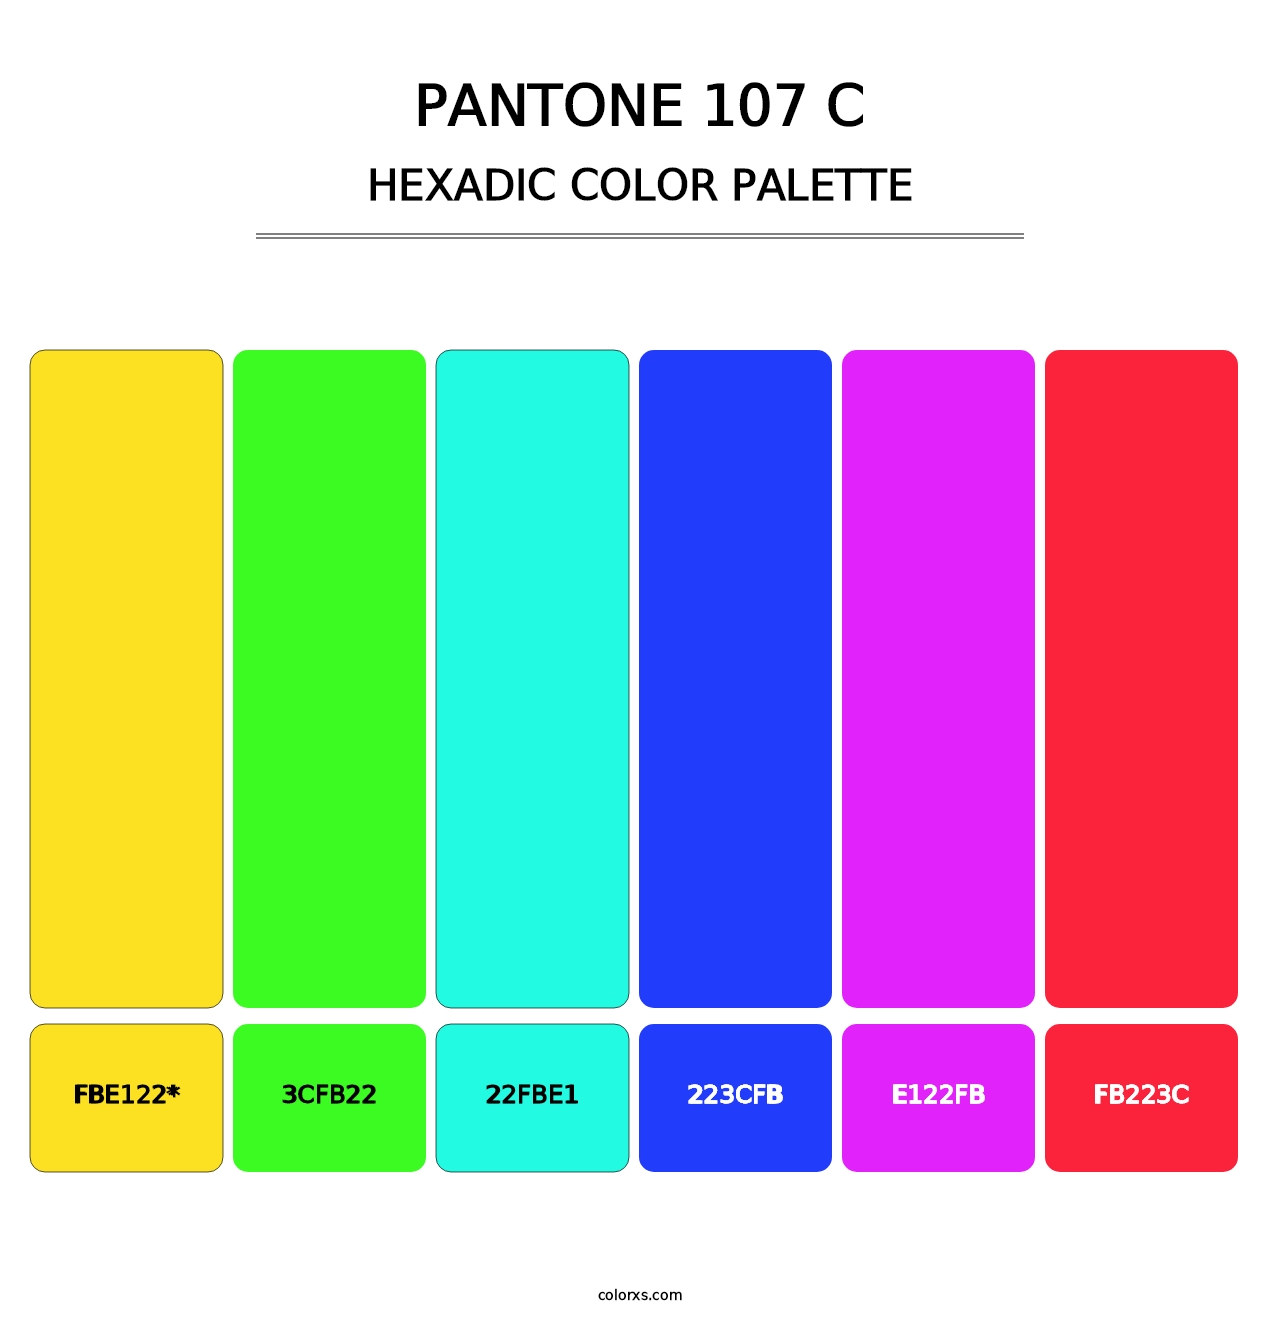 PANTONE 107 C - Hexadic Color Palette